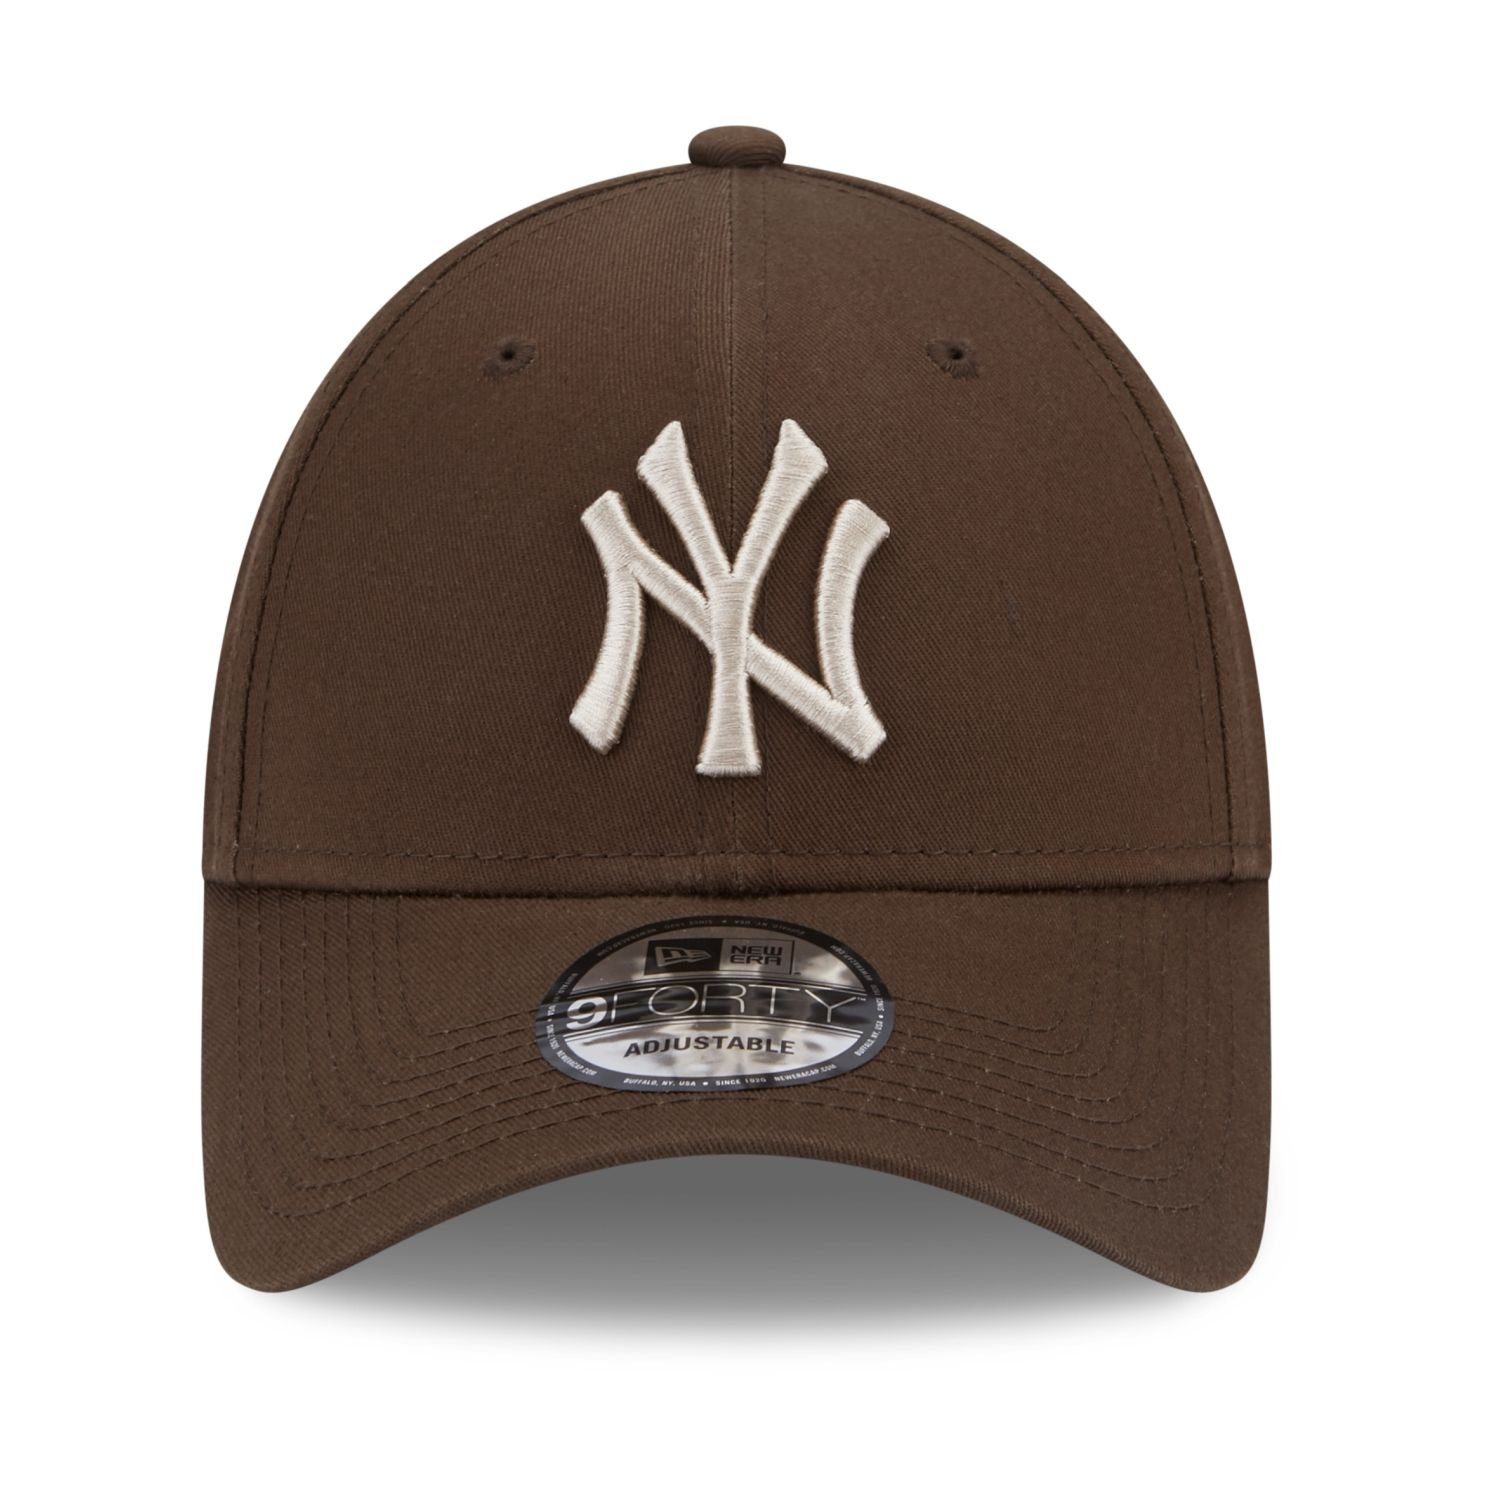 New Cap Era dunkelbraun 9Forty York New walnut Strapback Baseball Yankees